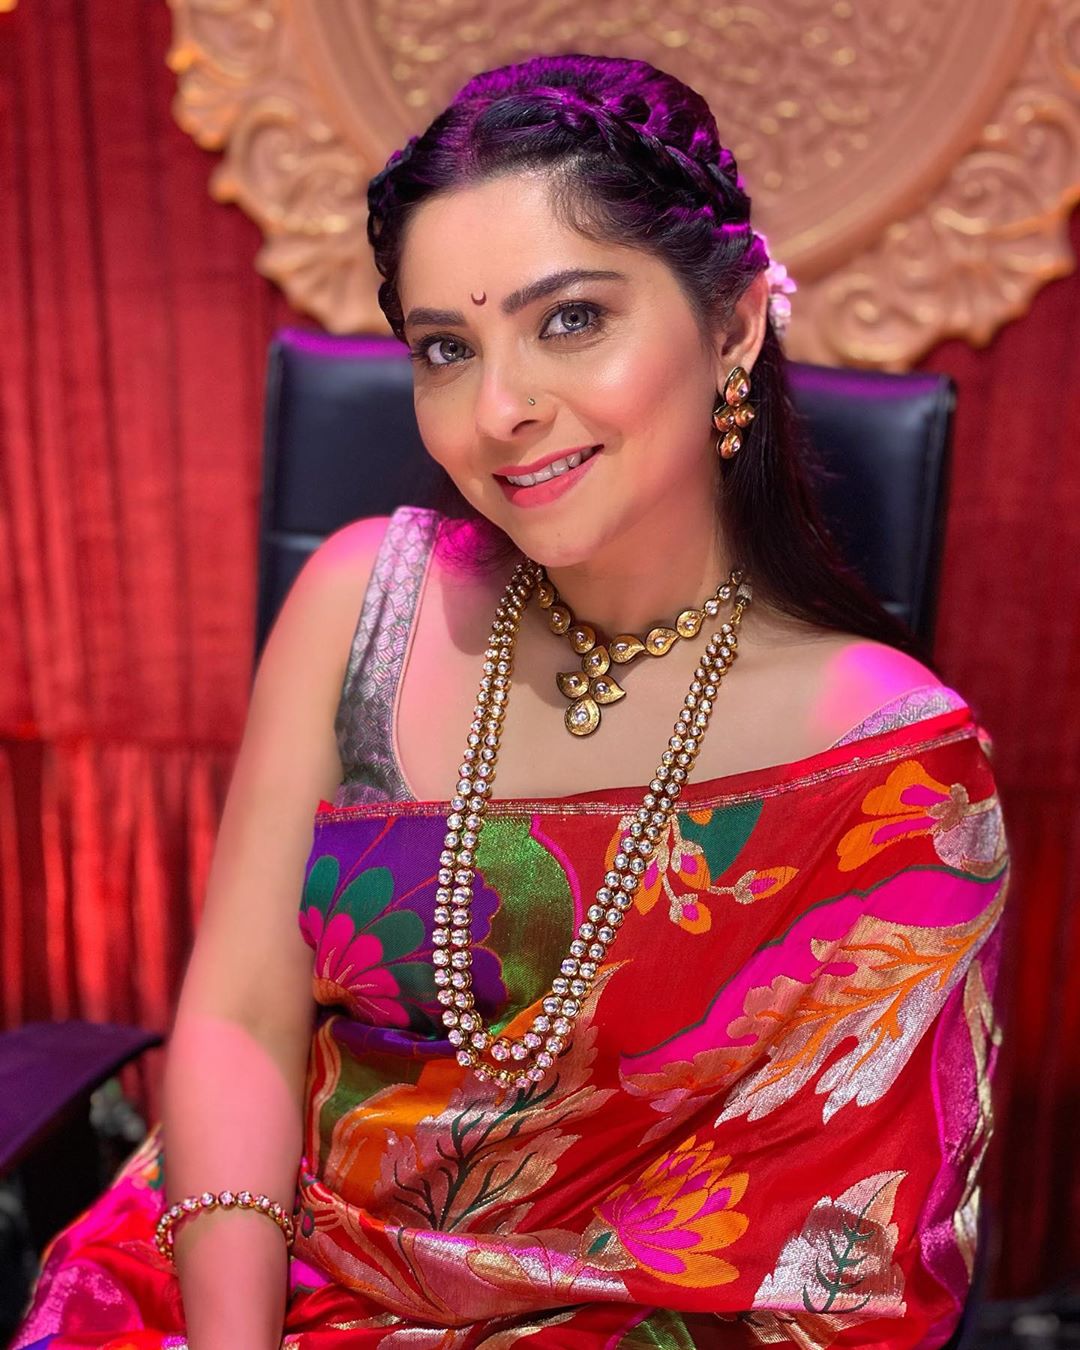 Hot Marathi Actress Sonali Kulkarni Wallpapers, Pictures 